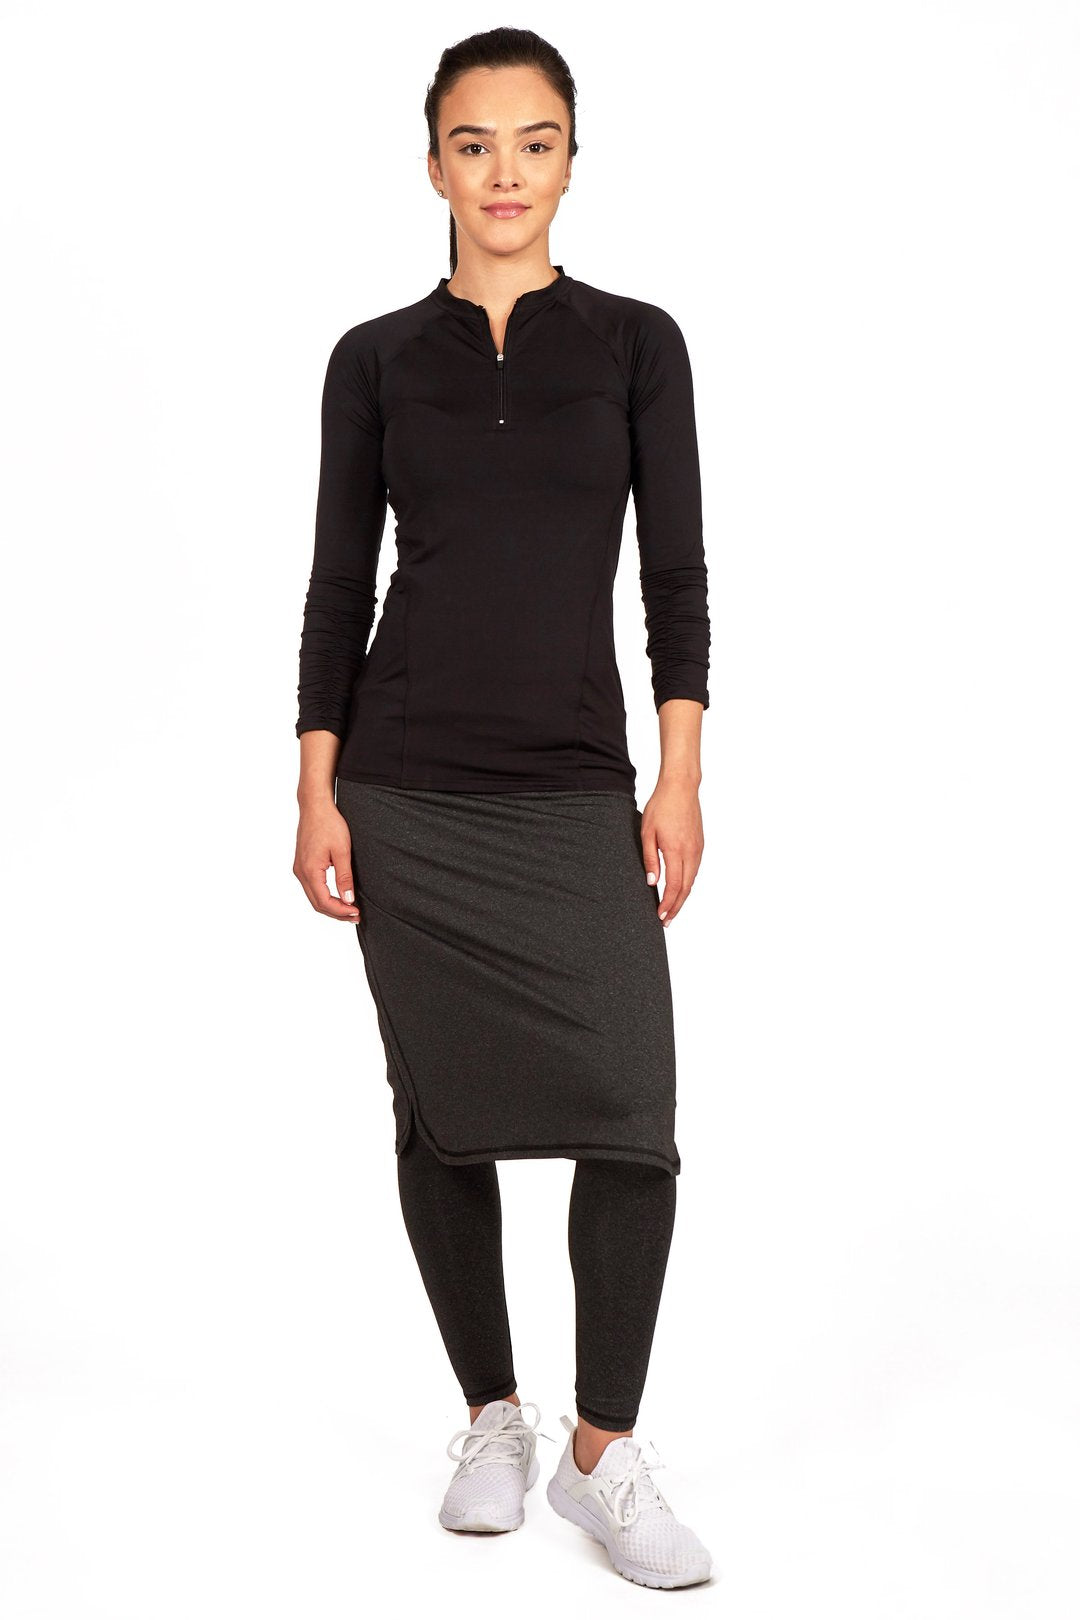 Snoga Women's Modest Midi Athletic Pencil Skirt w Leggings